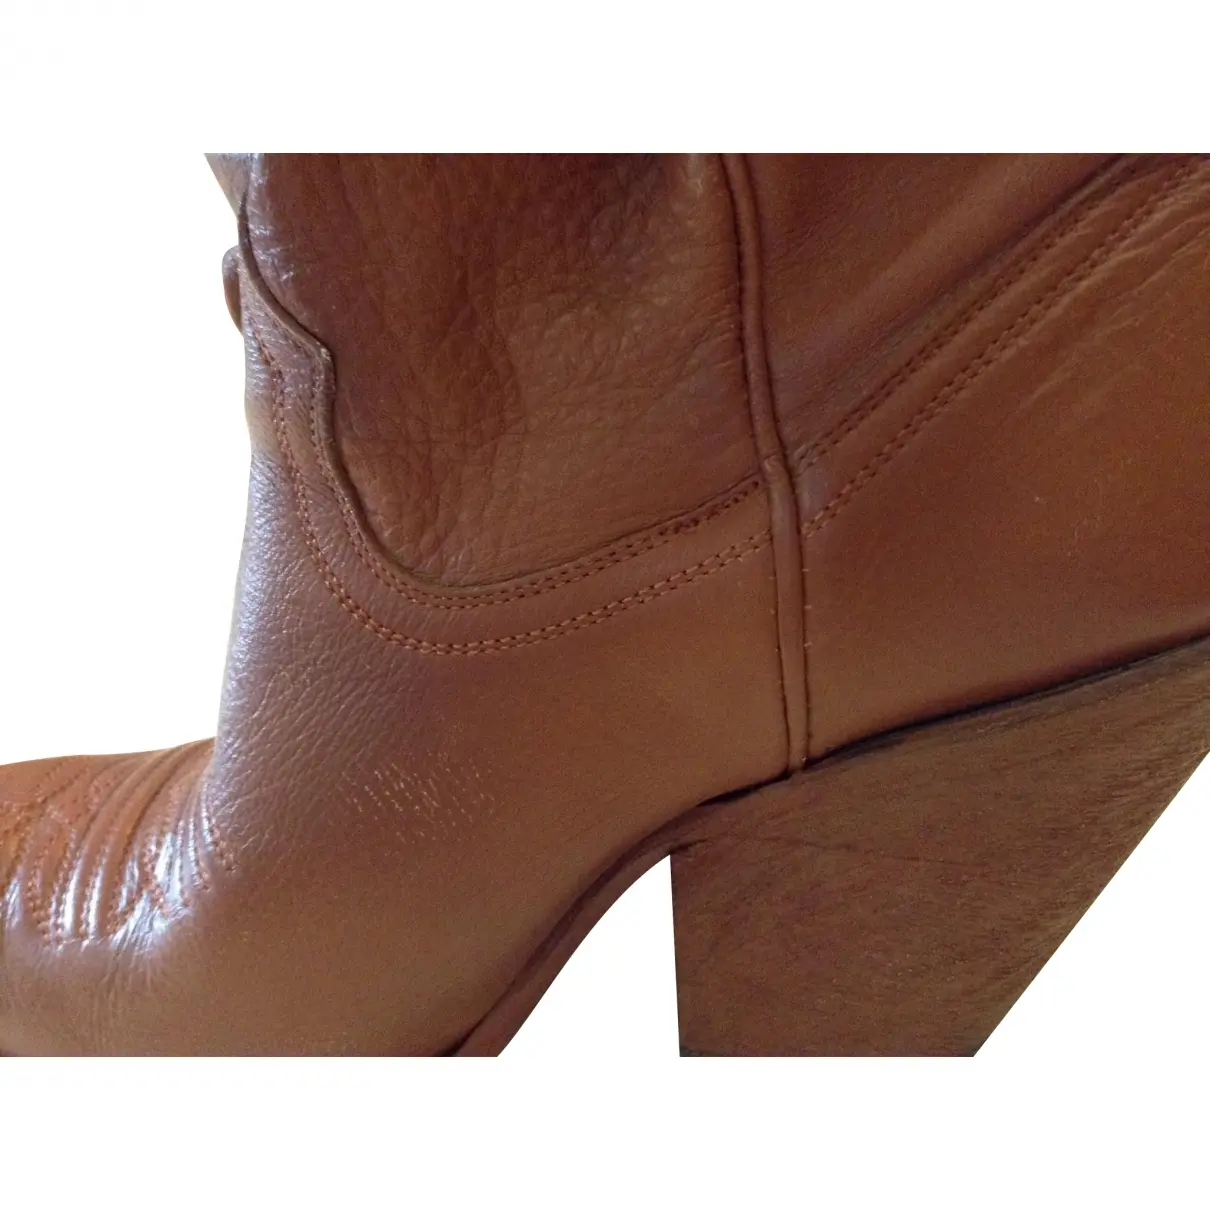 Buy Jean Paul Gaultier Brown Leather Boots online